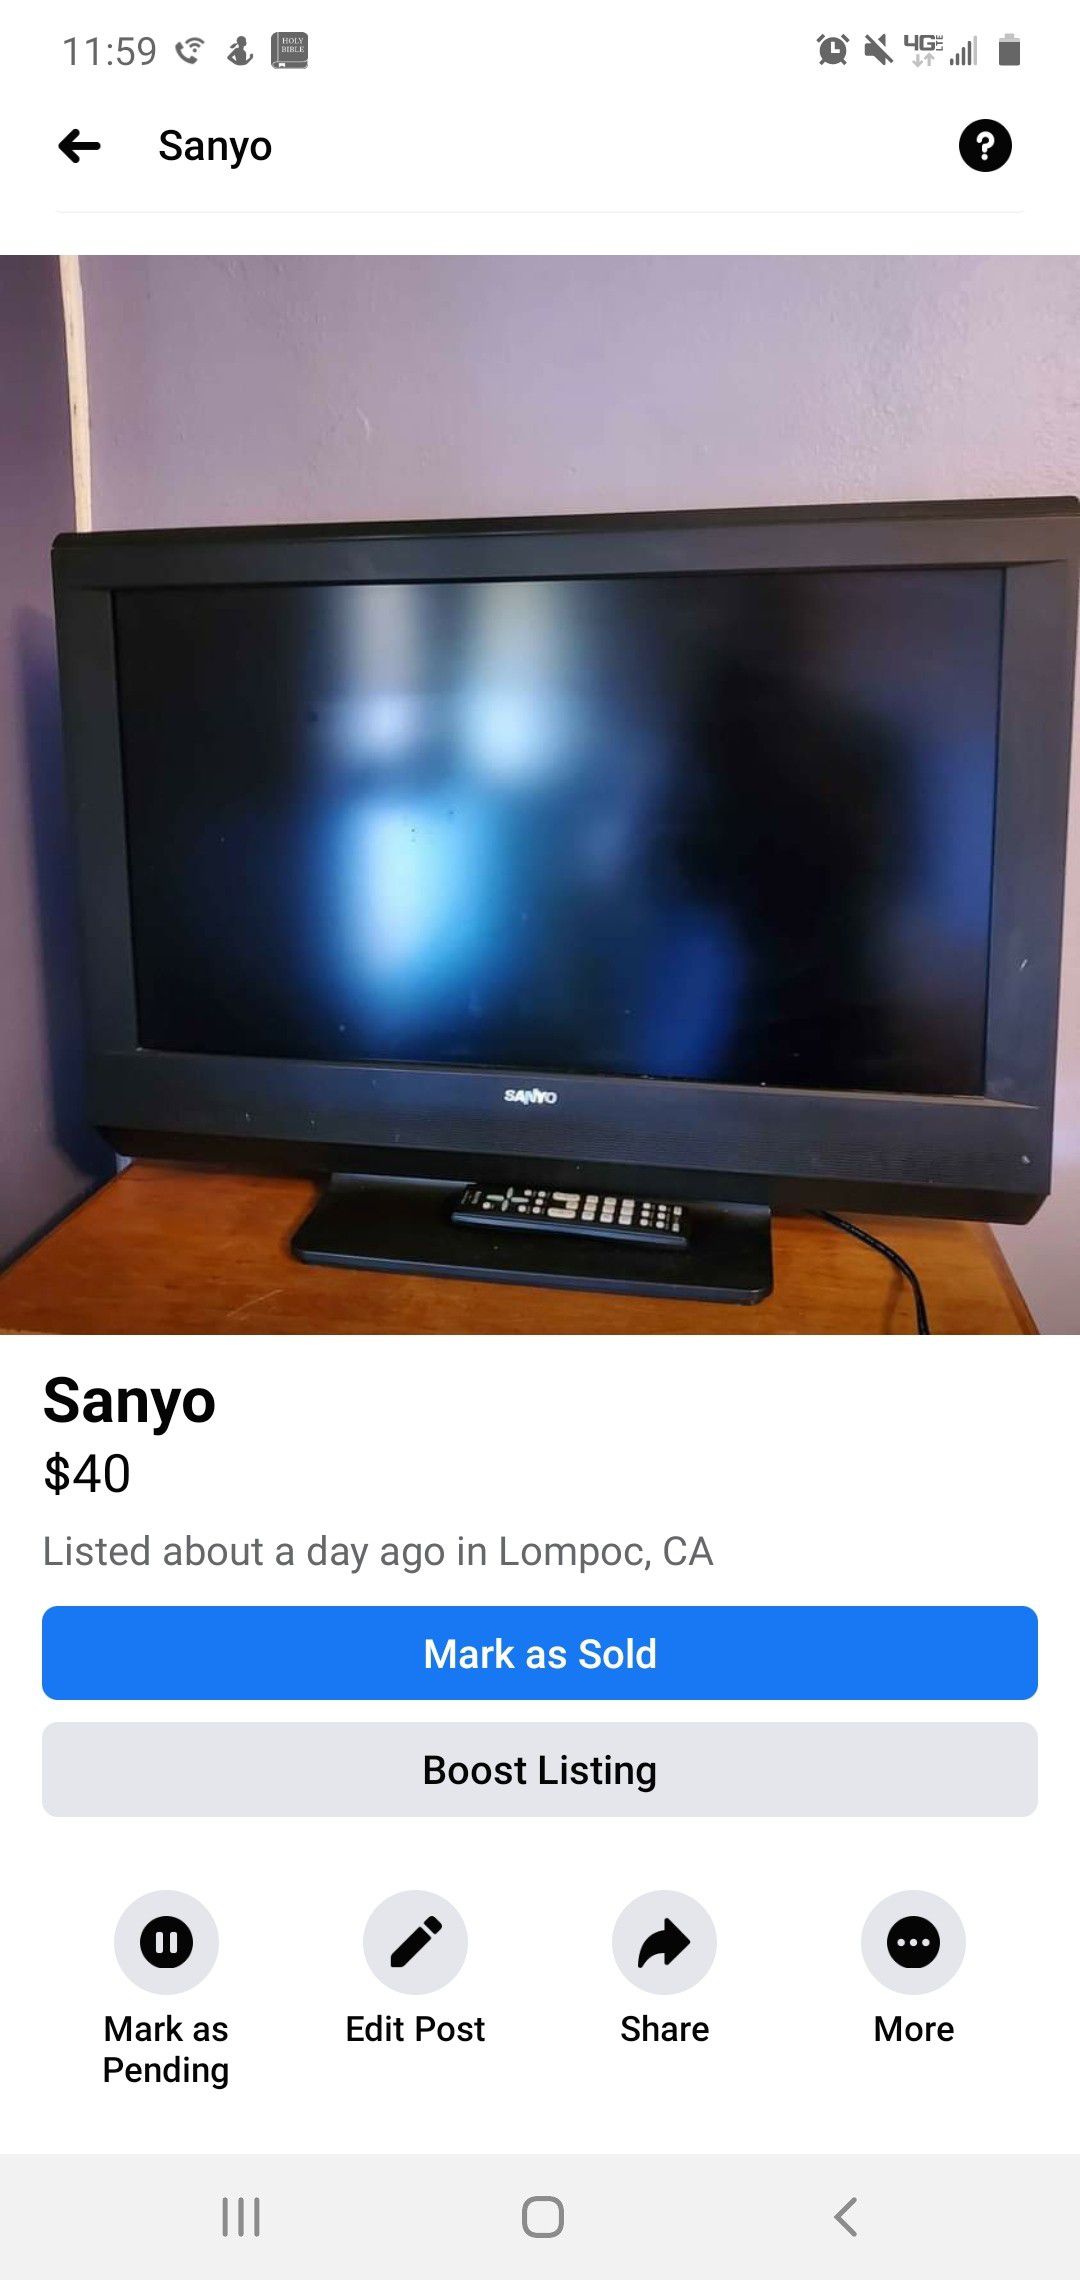 Sanyo TV